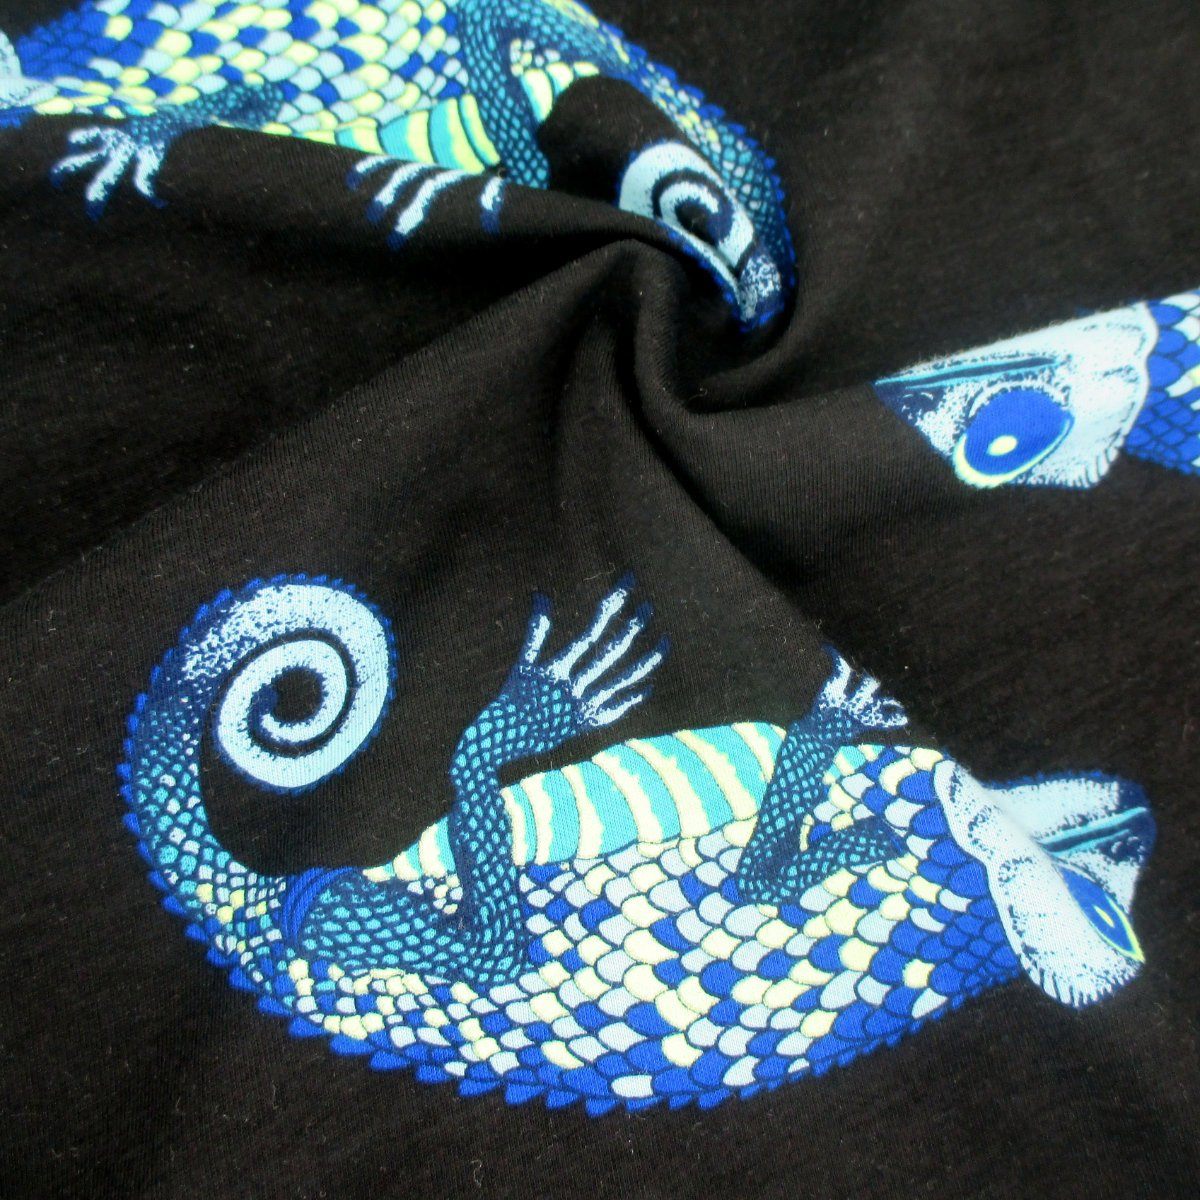 Rock Atoll Men's Neon Chameleon Iguana All Over Print Round Neck Tee T-Shirt in Black